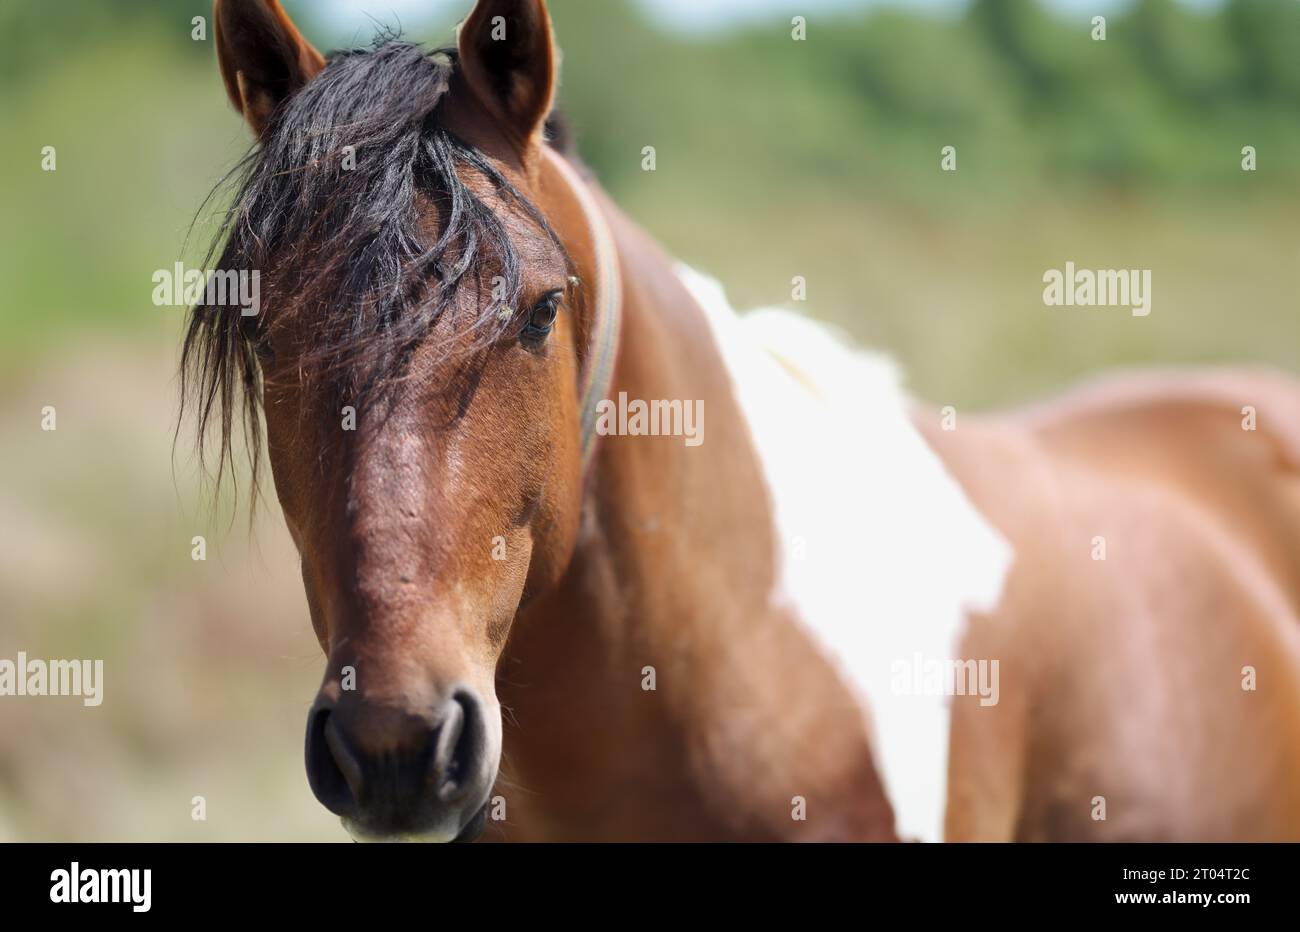 Old Appaloosa horse Stock Photo - Alamy